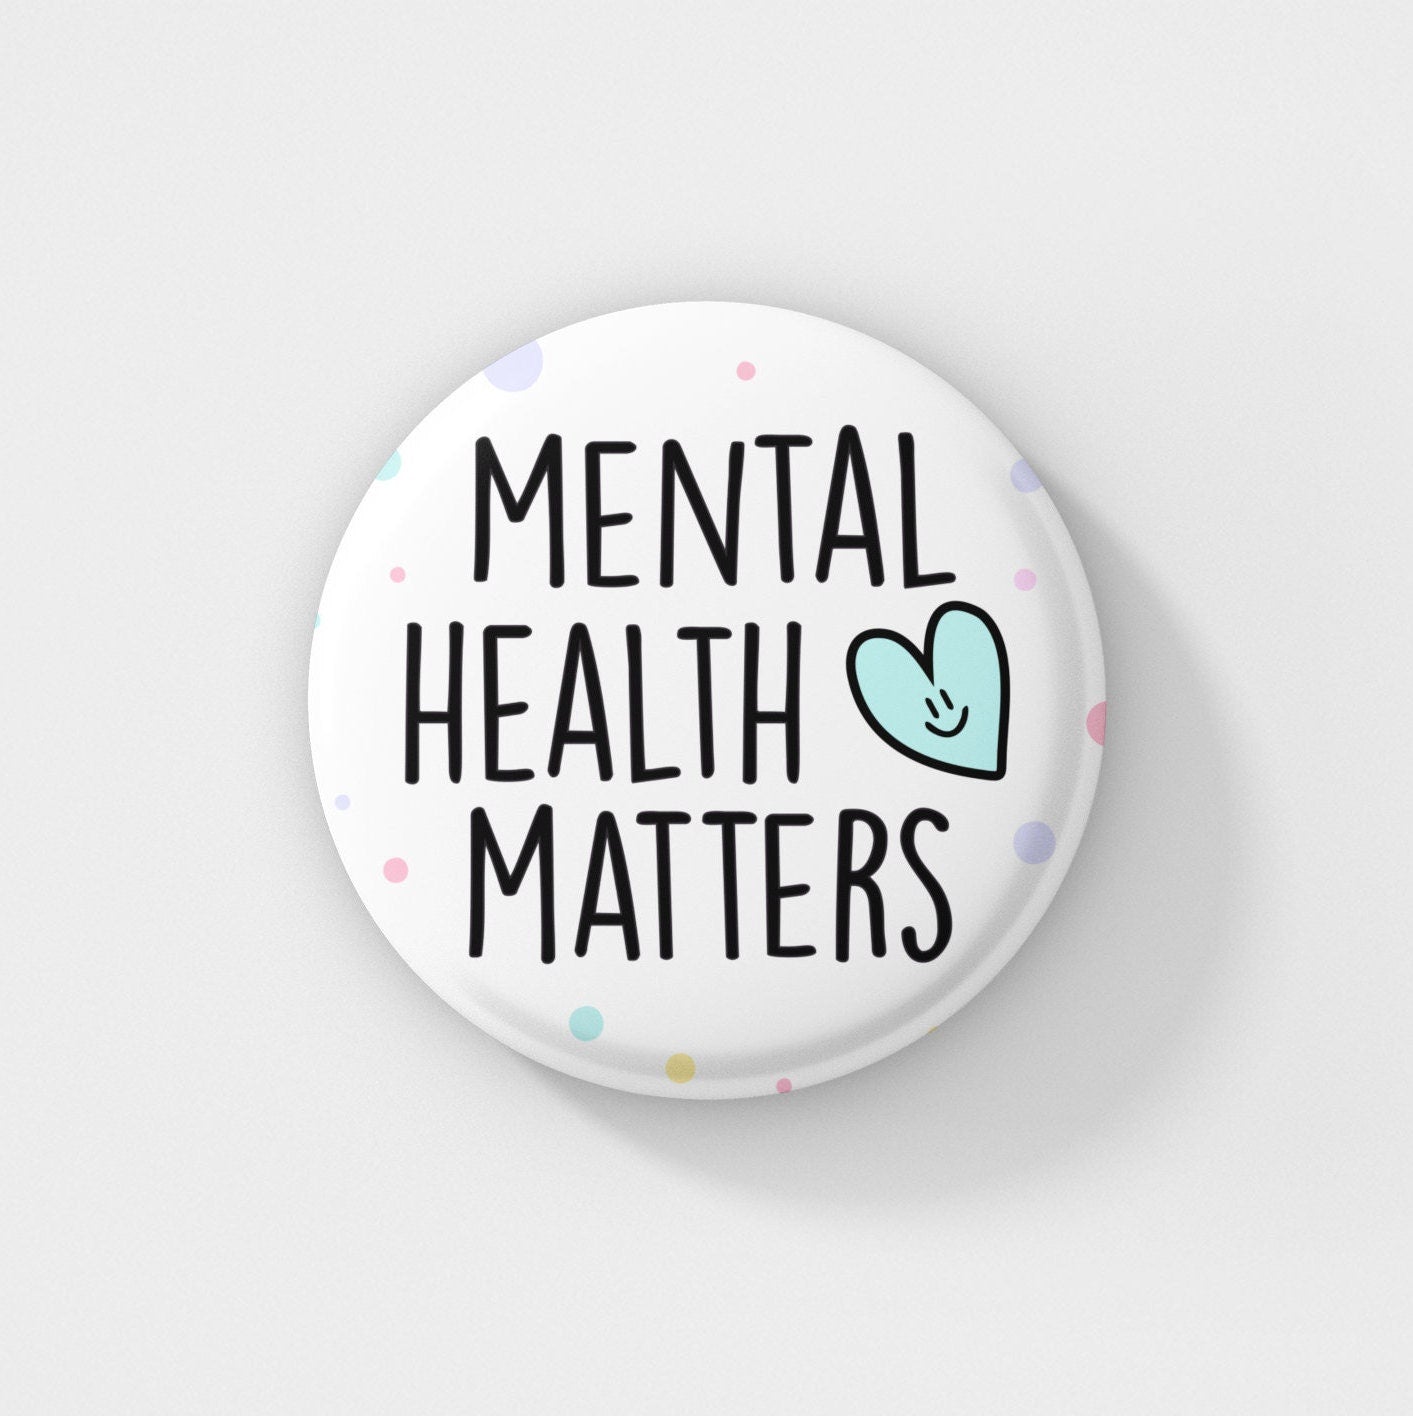 Mental Health Matters Pin Badge | Self Care Gift - Mental Health Pins - Mental Wellness - Positivity Pin